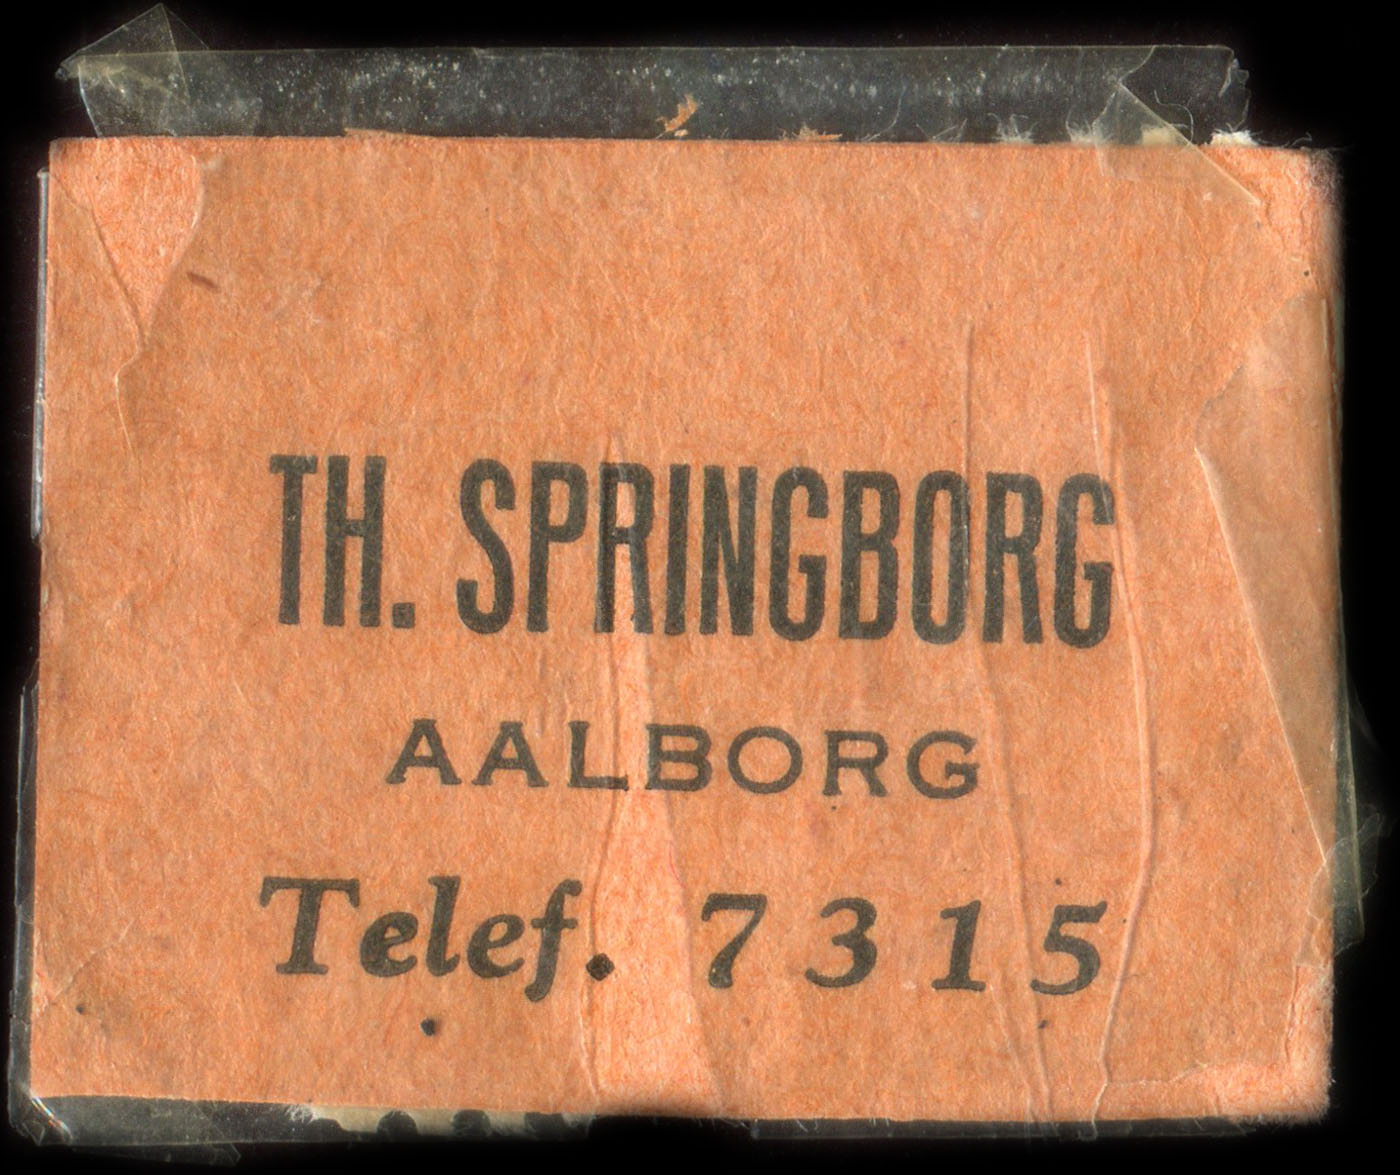 Timbre-monnaie Th. Spingborg - Aalborg - Telef. 7315 - Danemark